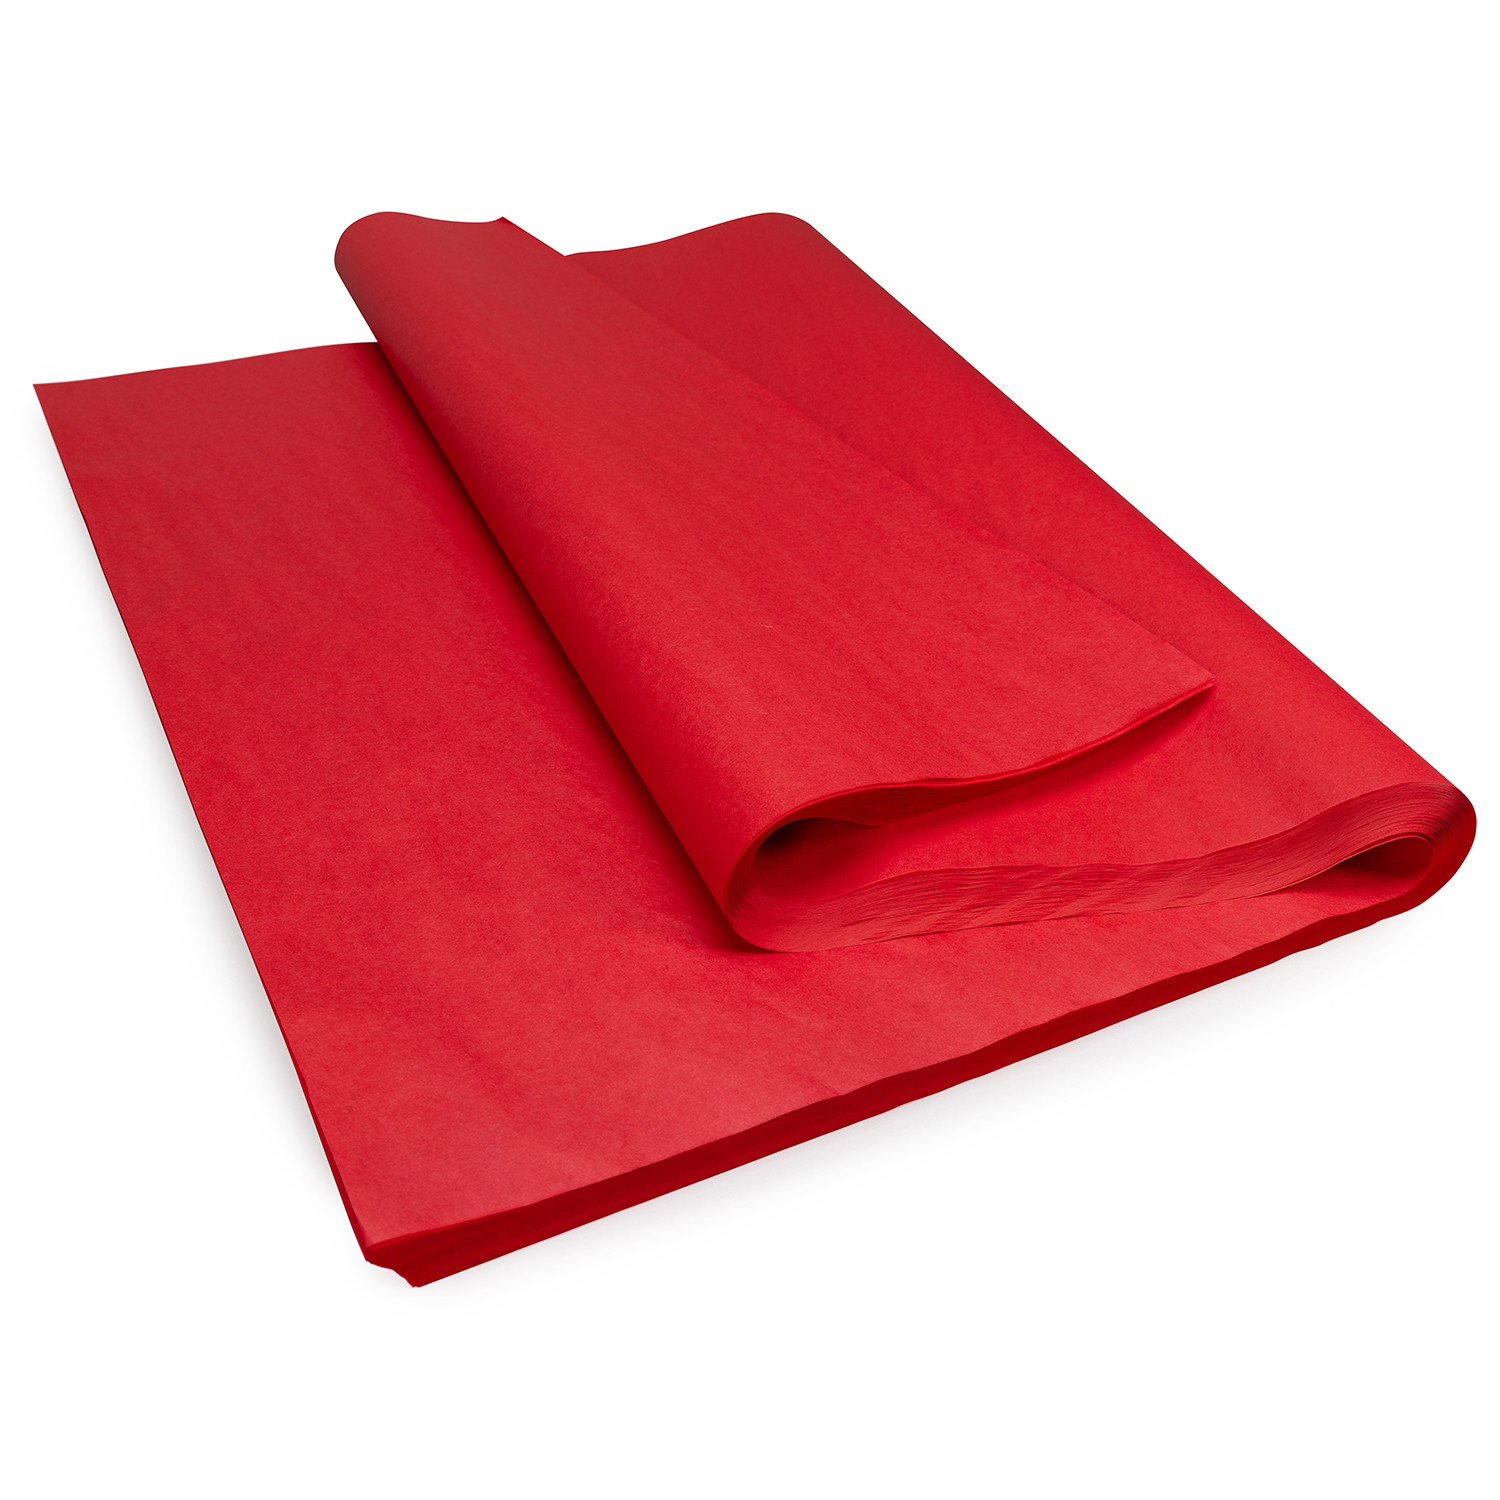 18 x 1800' SatinPack™ Tissue Paper Roll, 20 lbs, Black buy in stock in  U.S. in IDL Packaging